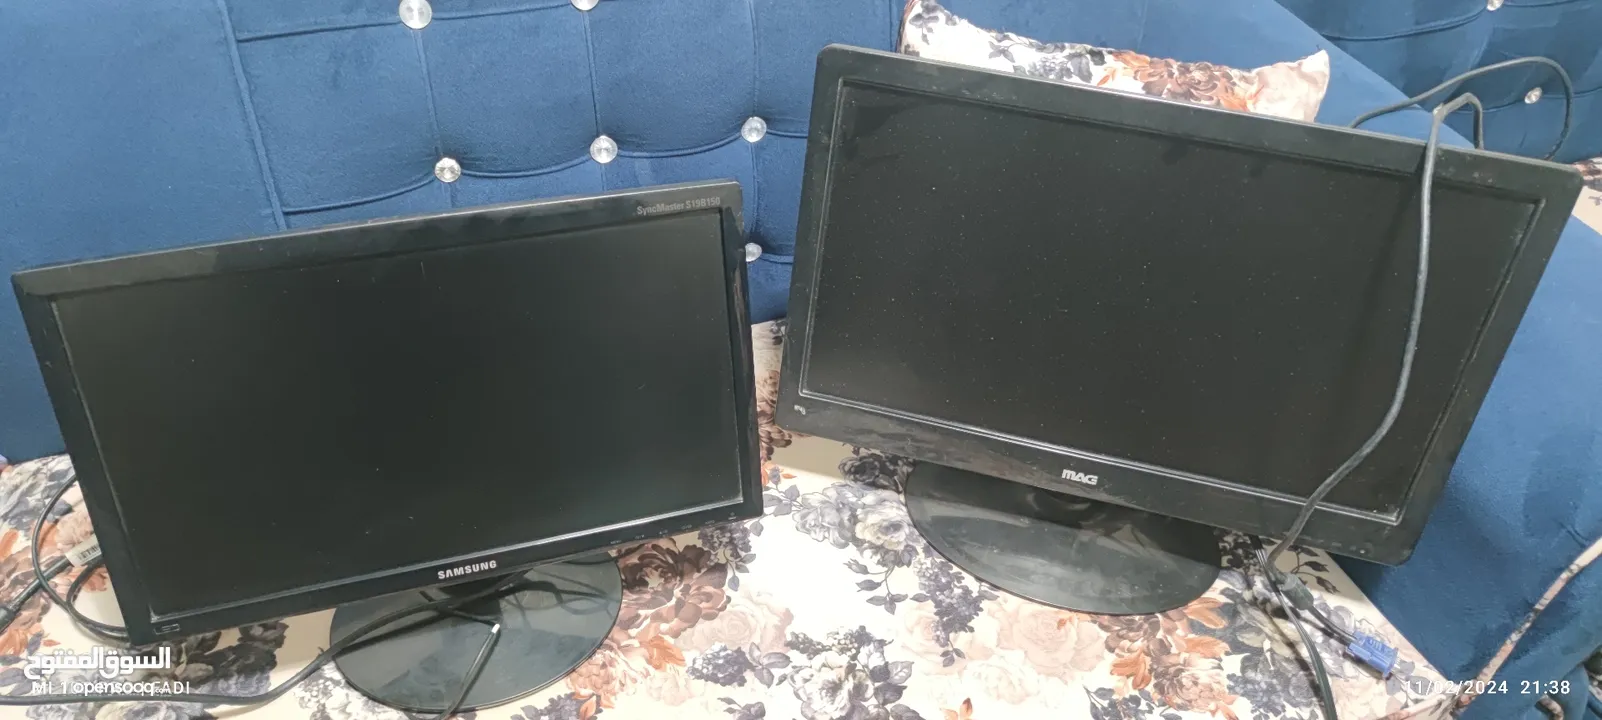 شاشتين كمبيوتر سامسونج وmag